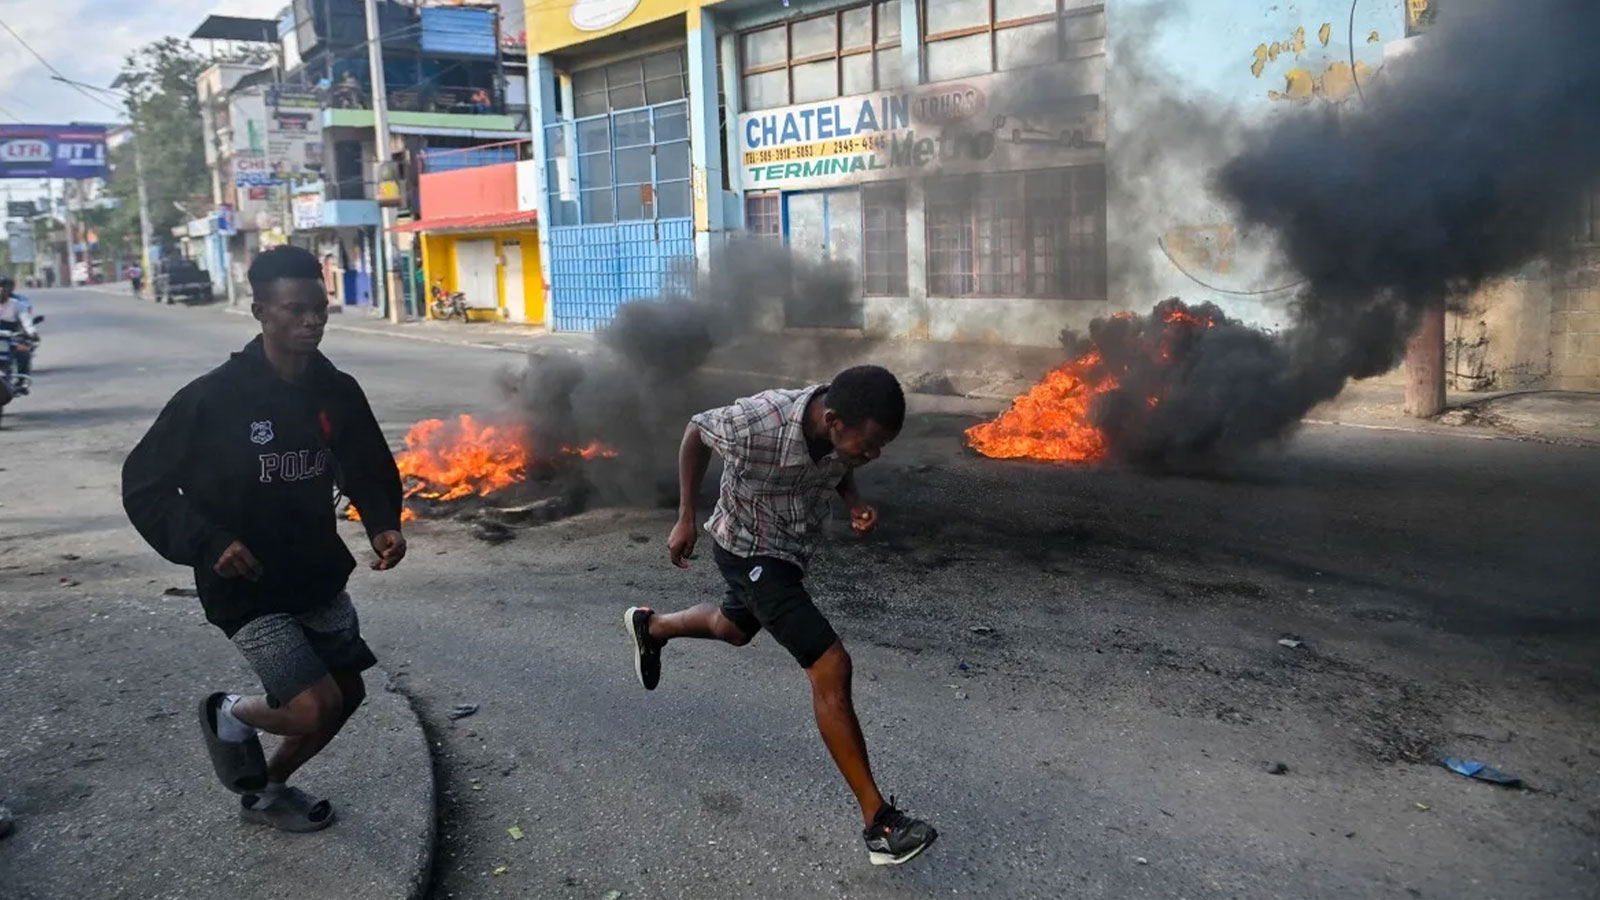 Haitian PM calls for calm as violent protests demand his resignation